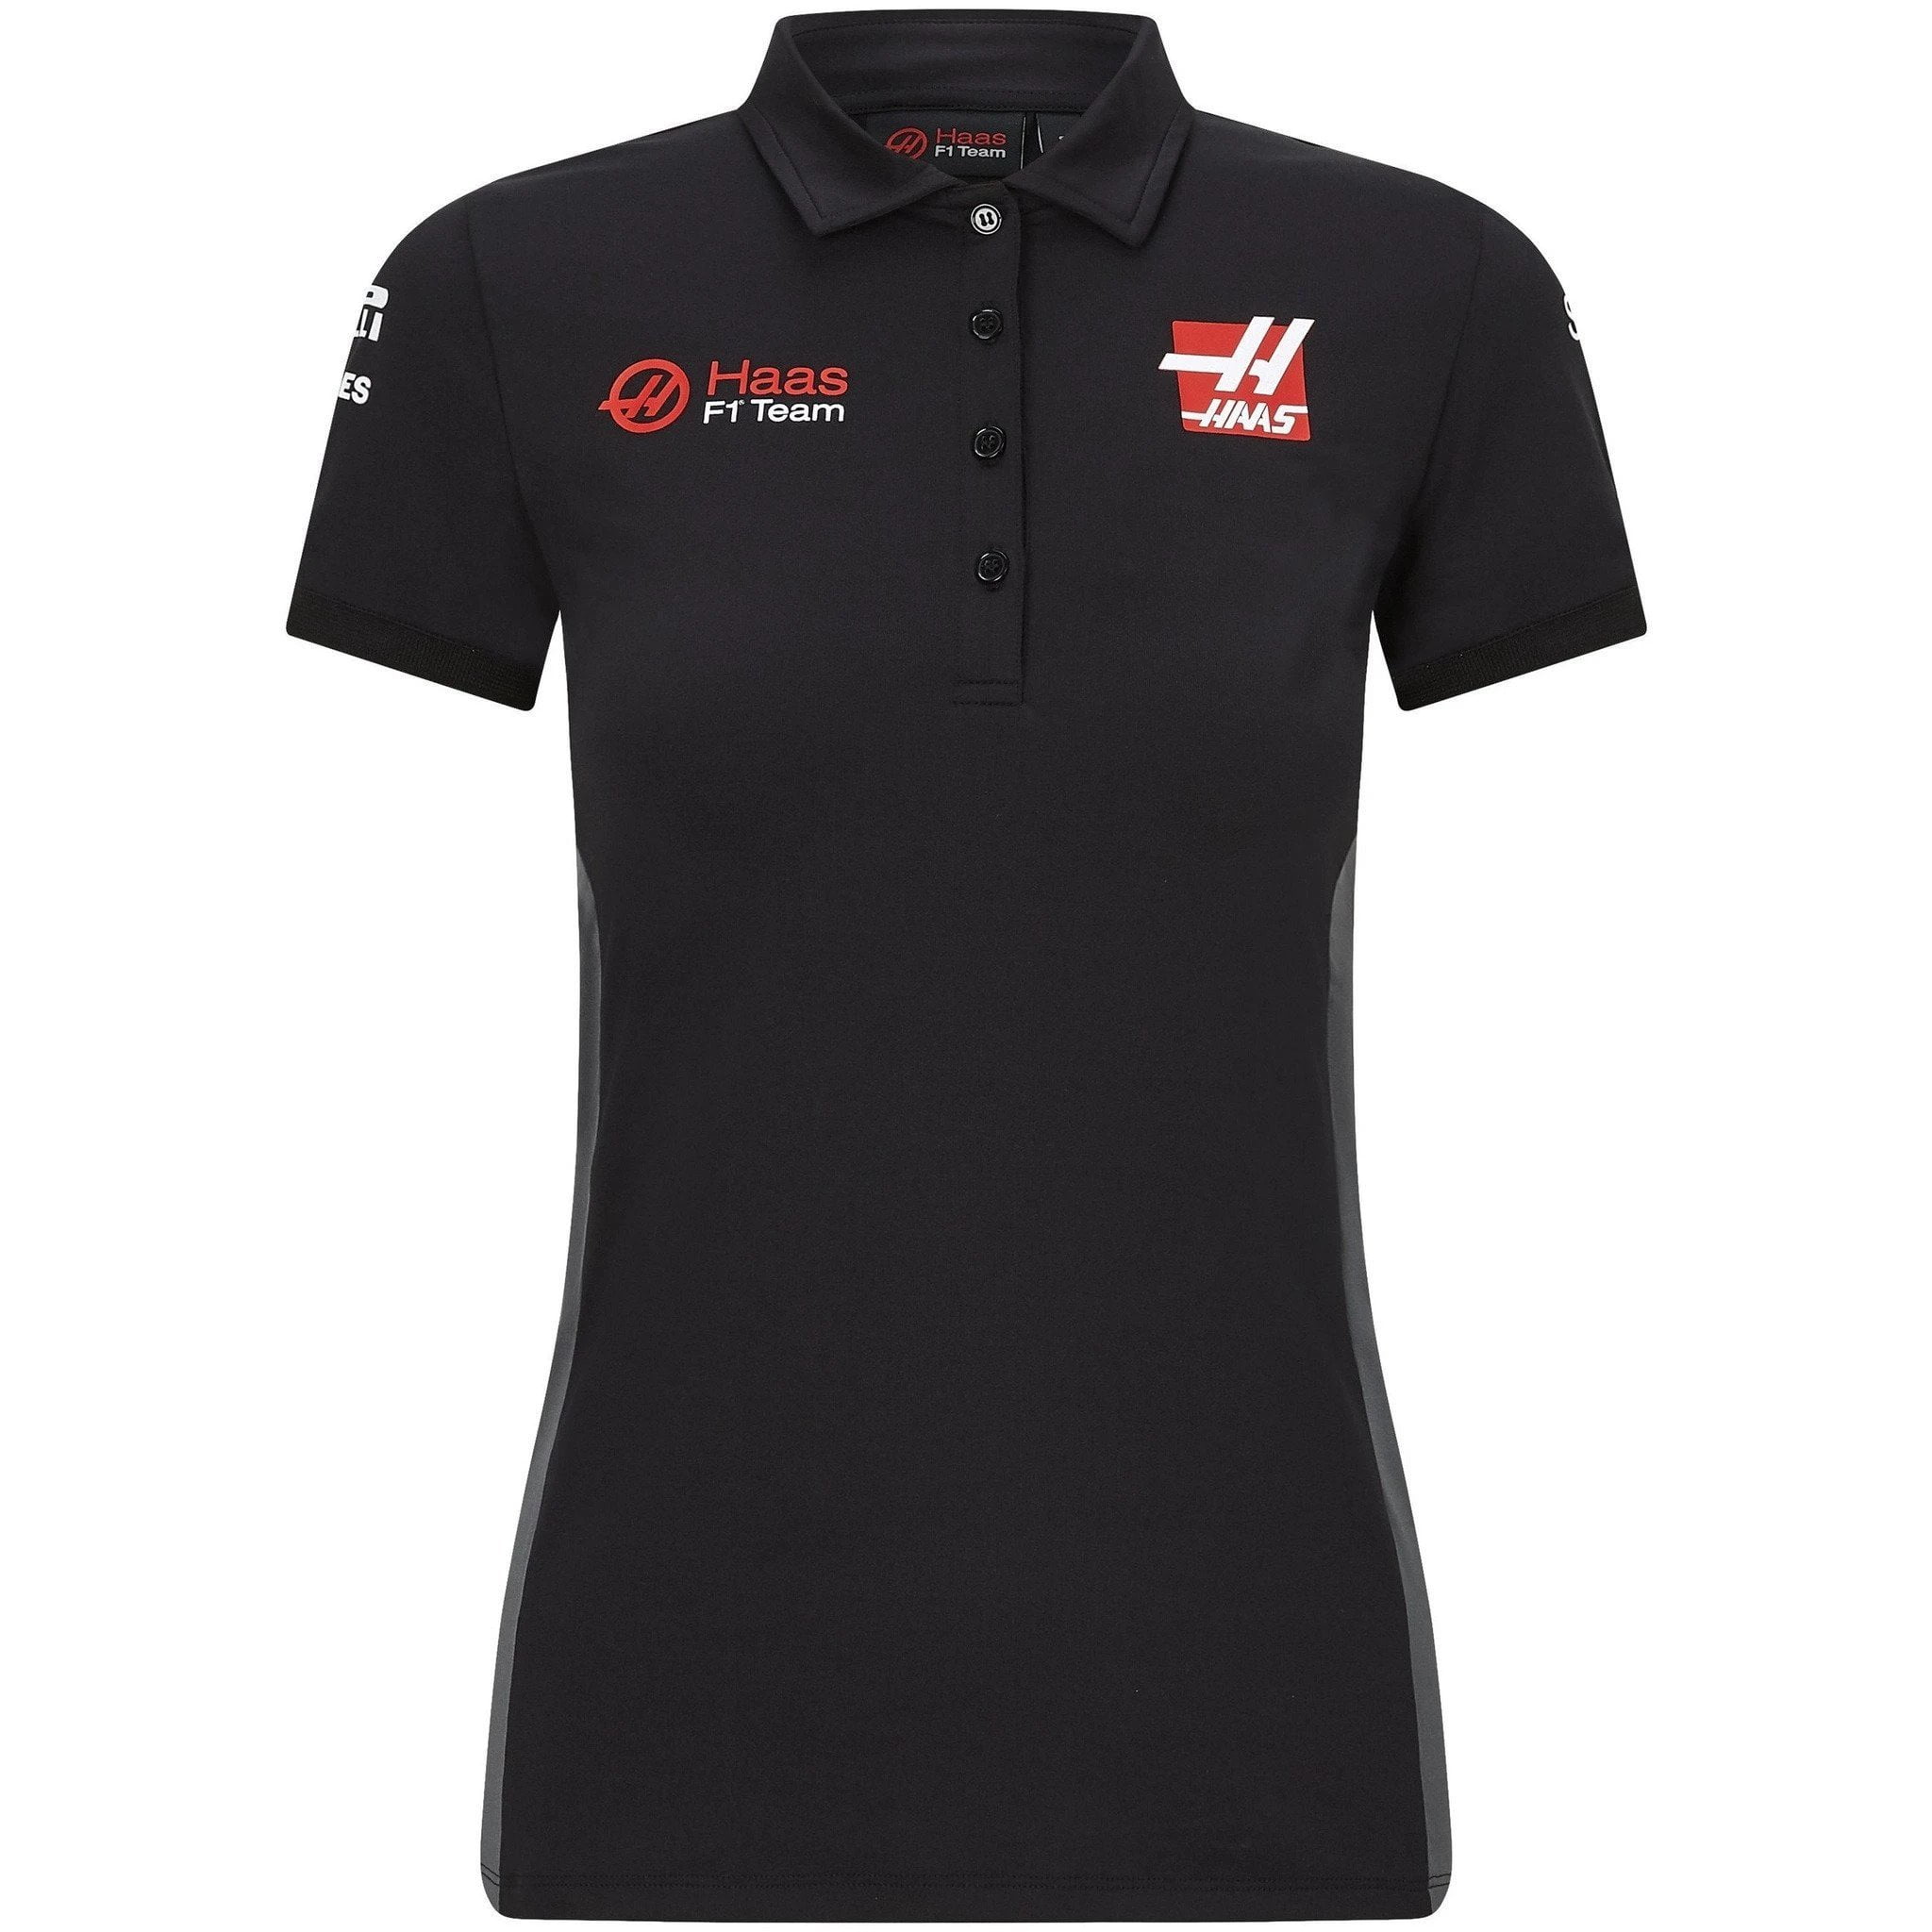 Haas F1 - Haas Racing F1 2020 Women's Team Polo Black - Walmart.com ...